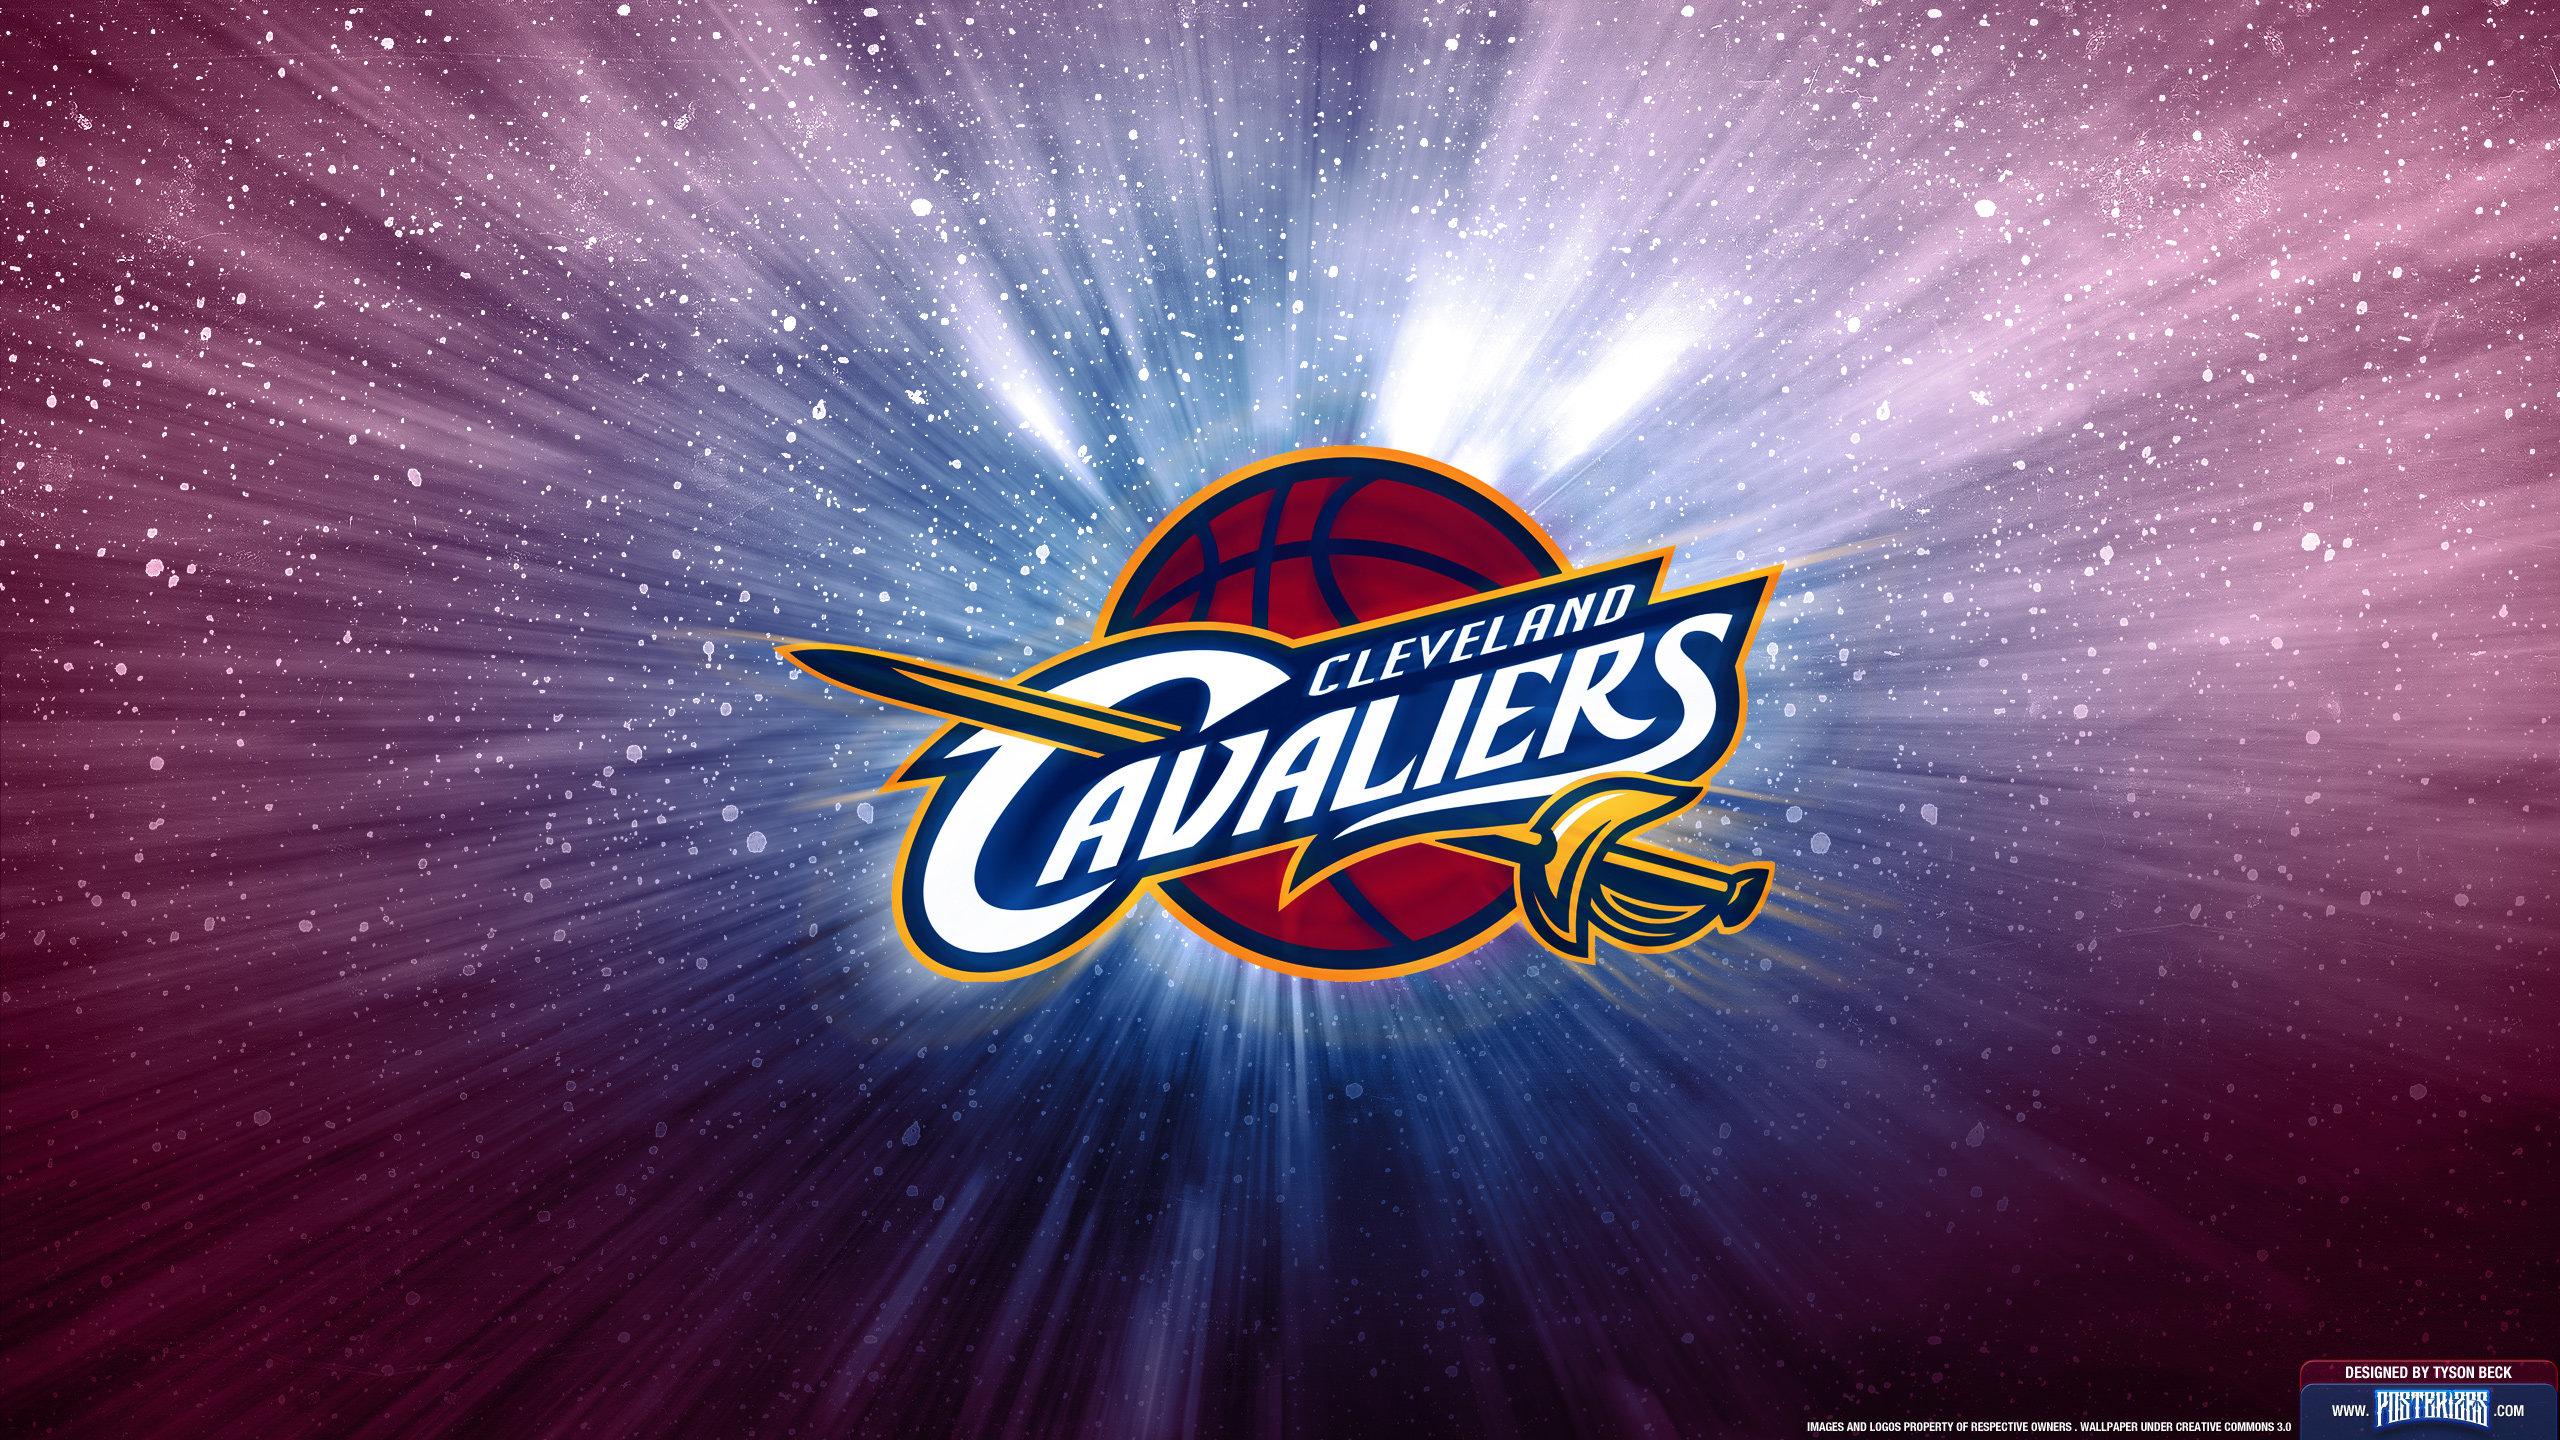 Cleveland Cavaliers (CAVS) wallpaper 2560x1440 desktop background